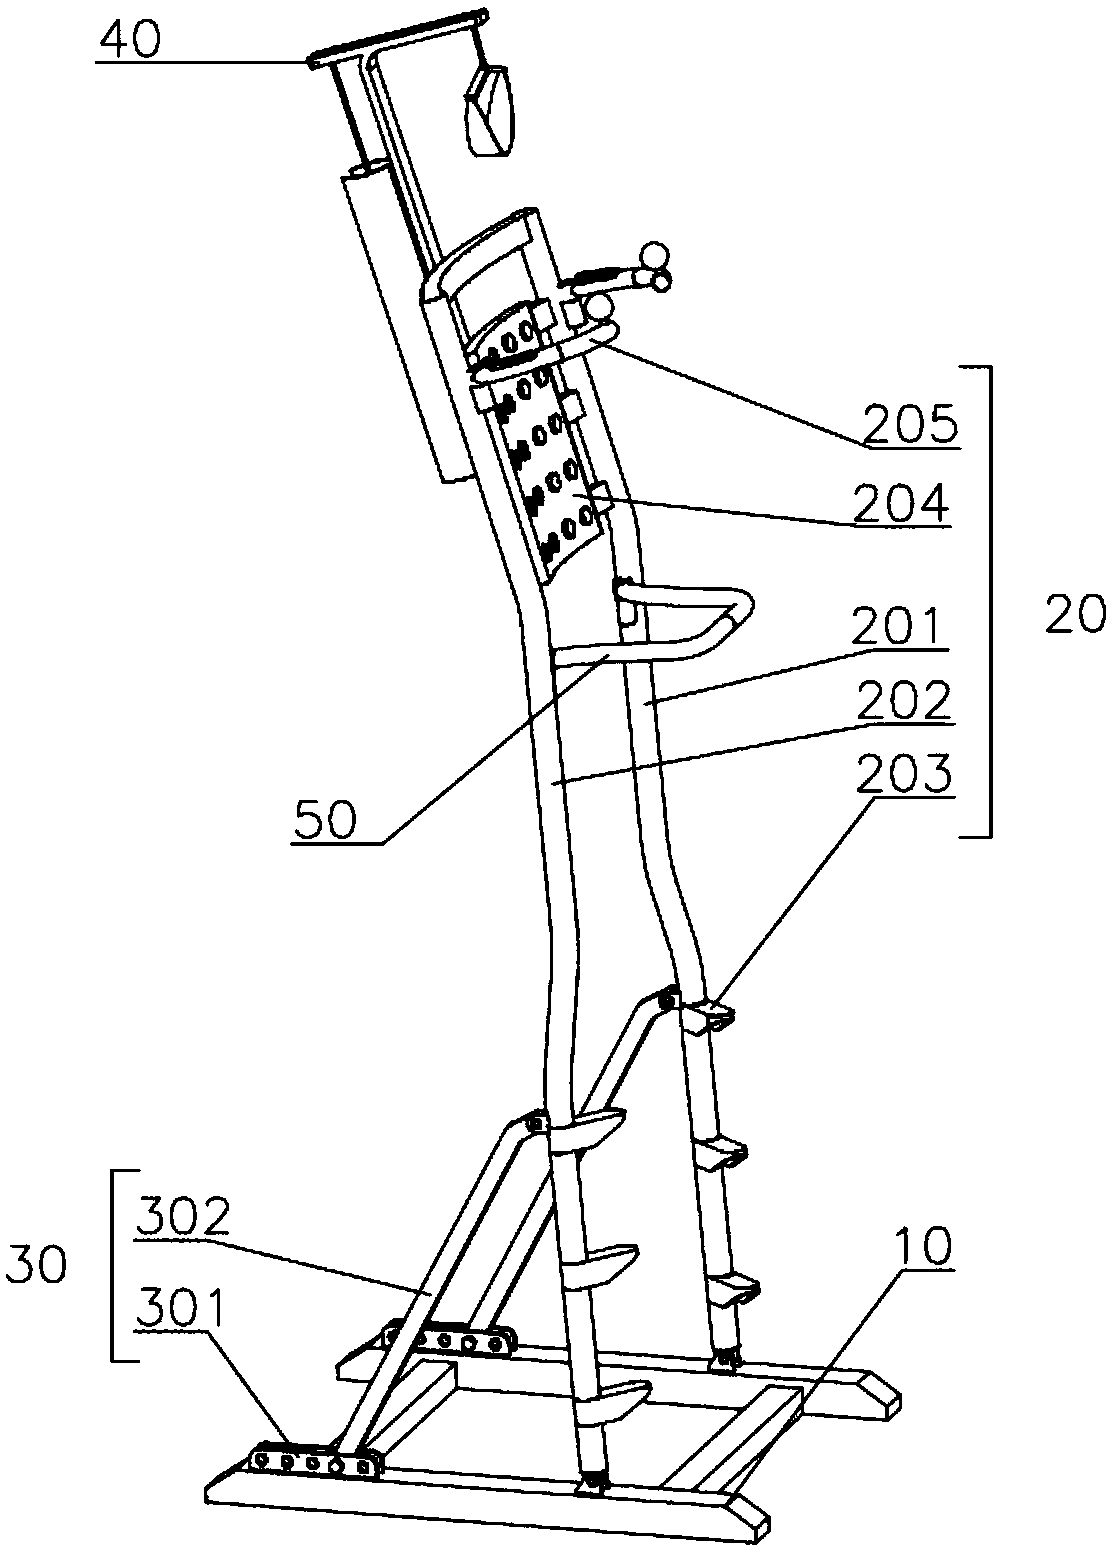 Lumbar rehabilitation exercise apparatus